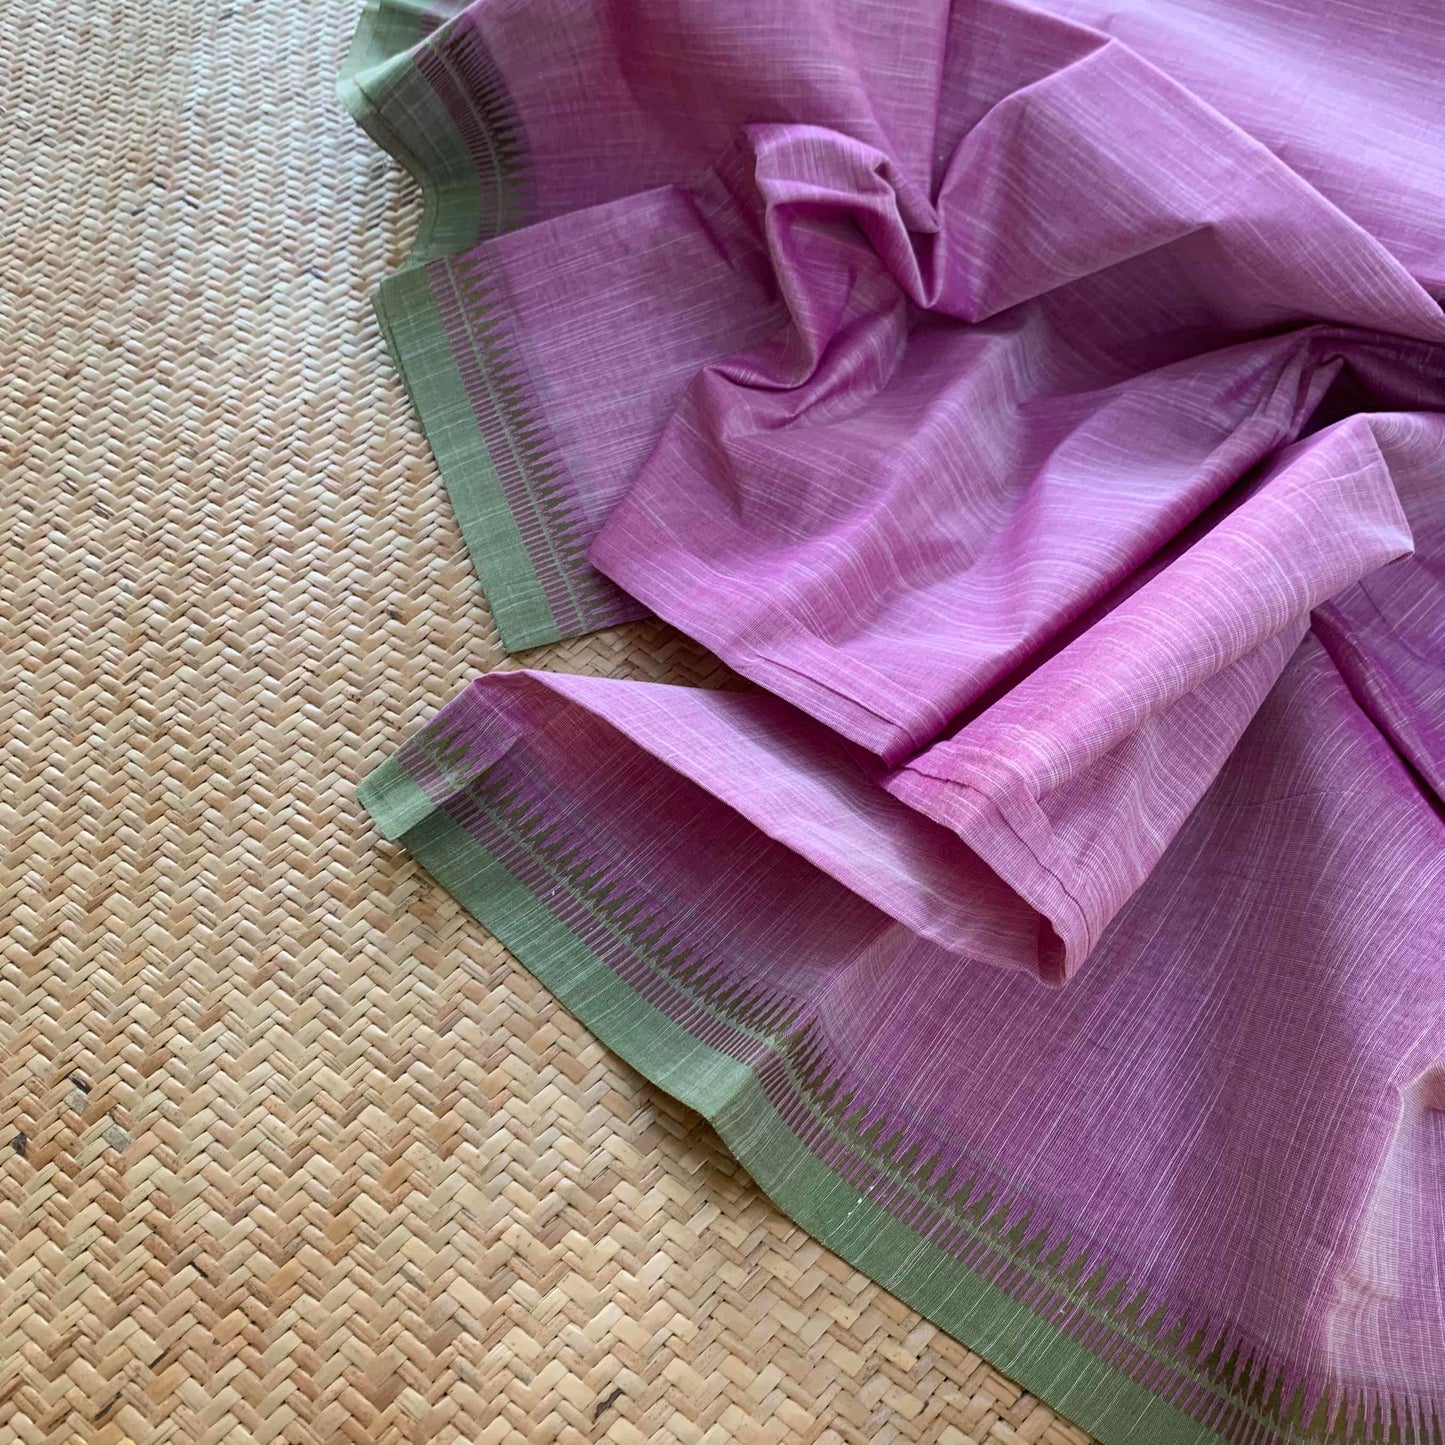 Chettinad Cotton Saree, Lavender Saree with Green Border